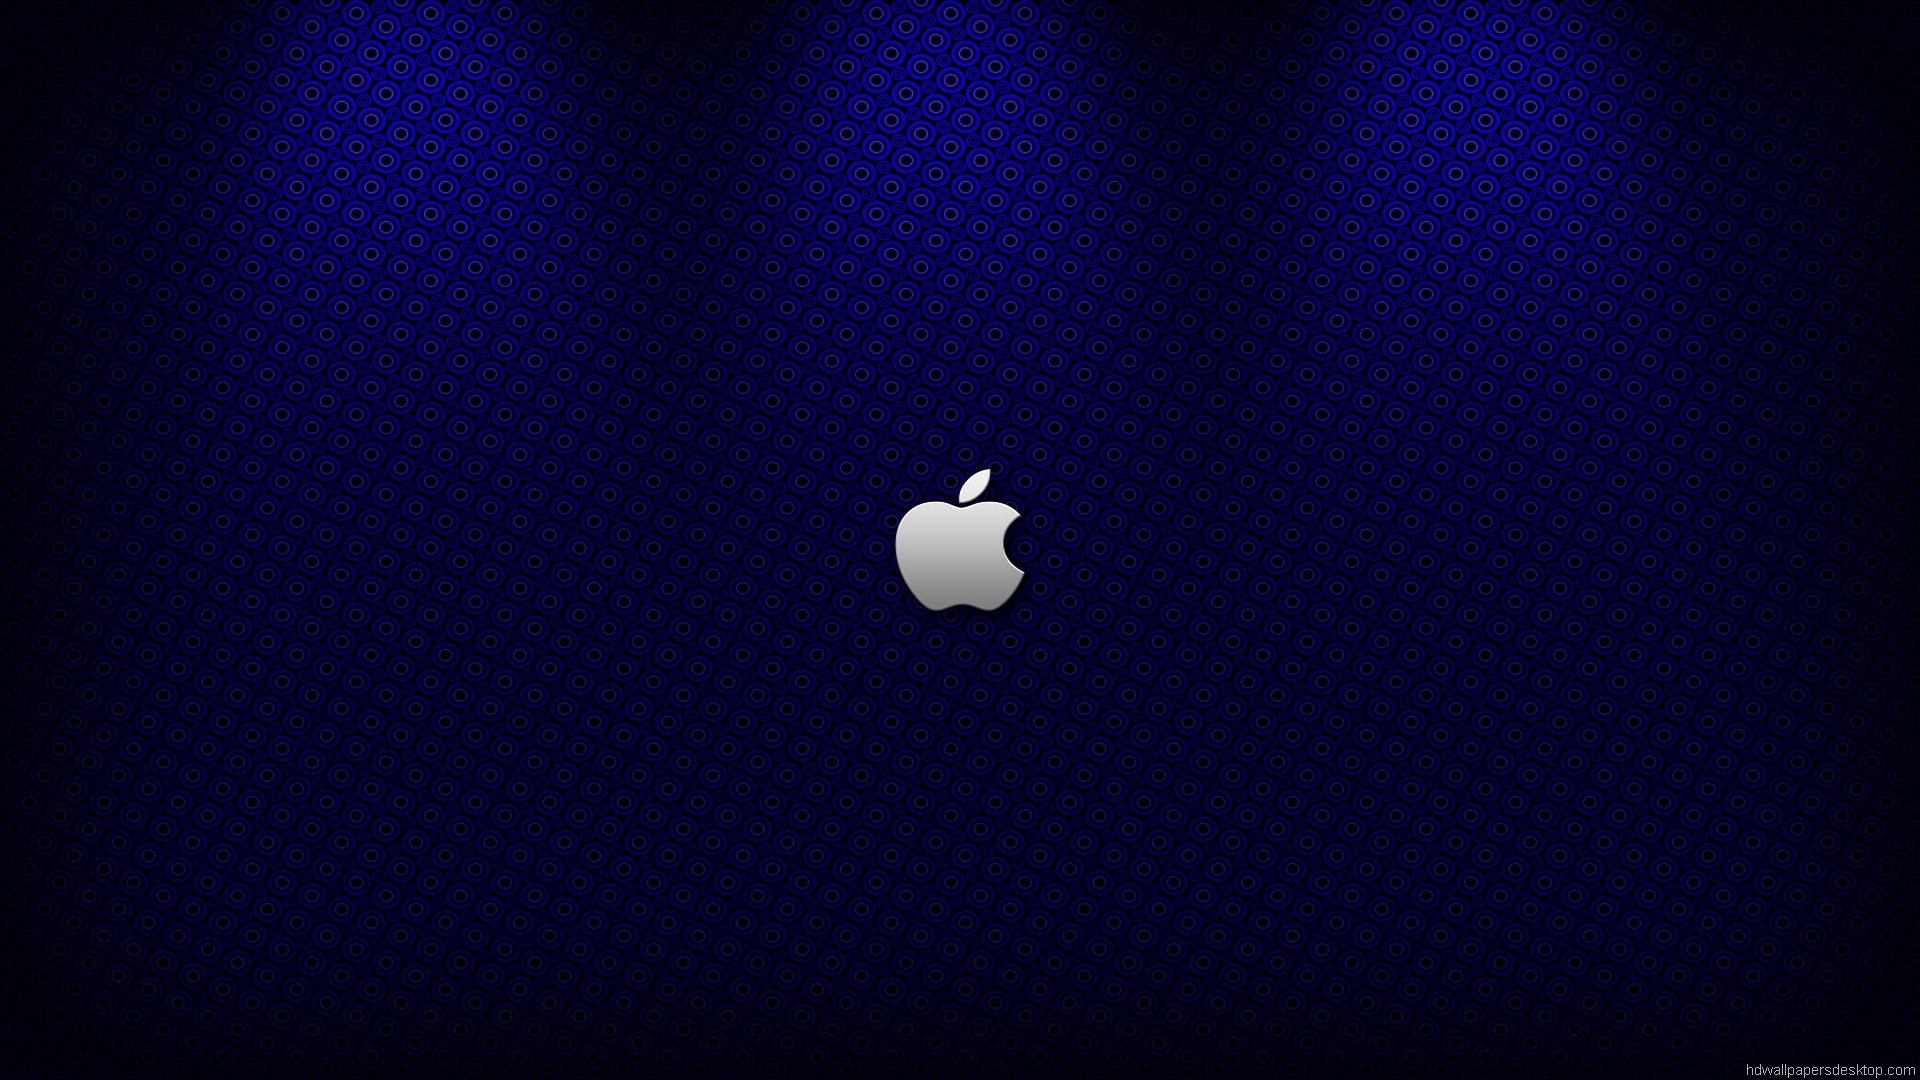 apple wallpaper full hd,operating system,blue,logo,font,sky